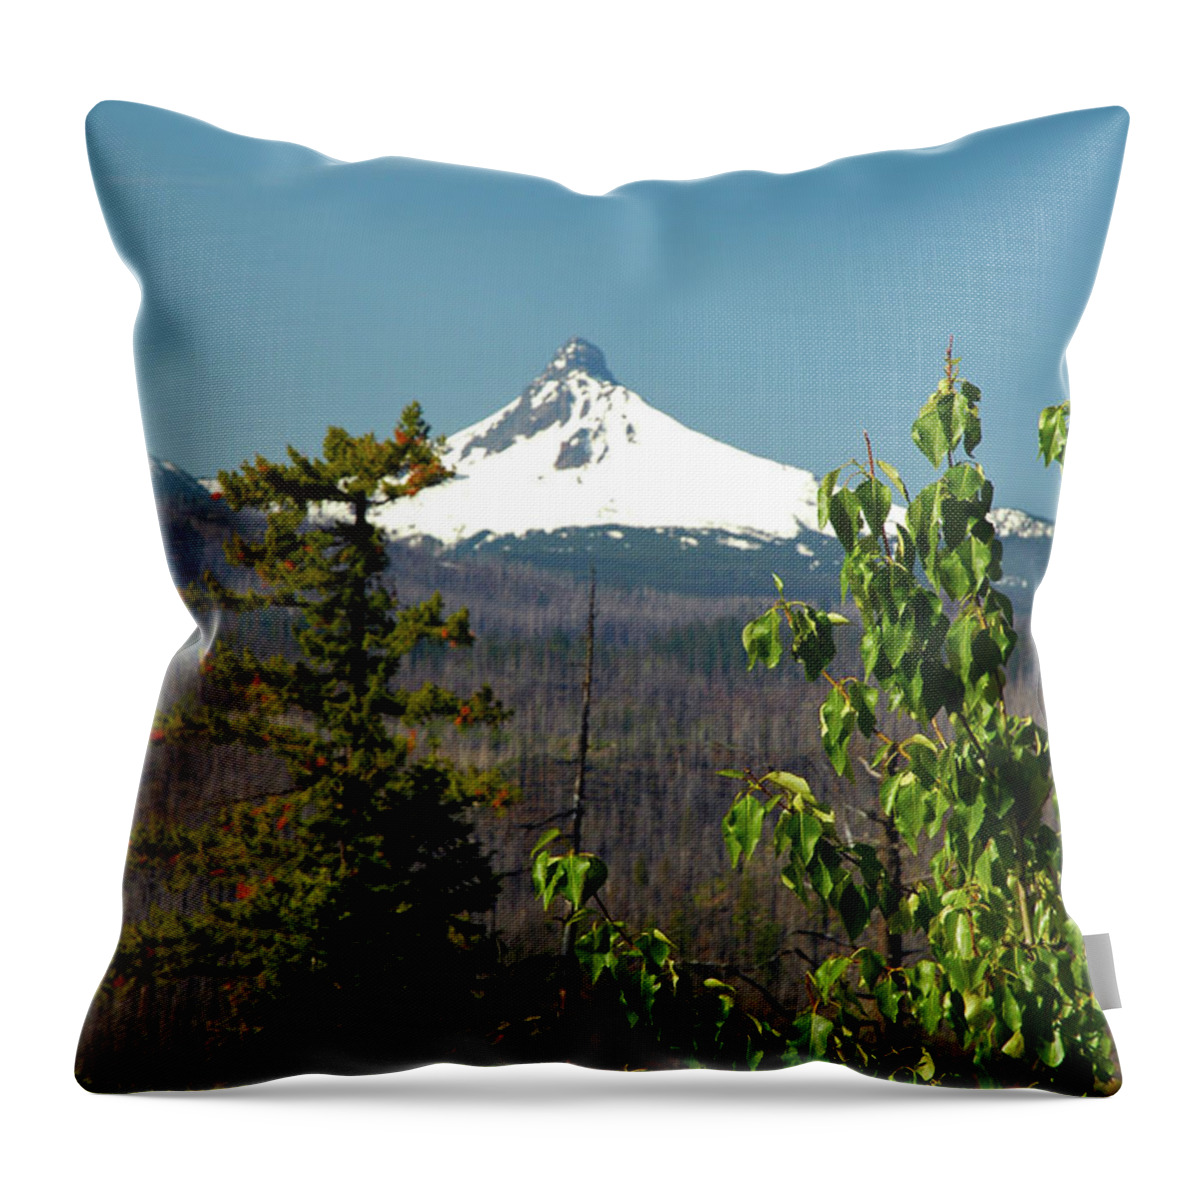 Mt. Washington Throw Pillow featuring the photograph Mt. Washington by Cindy Murphy